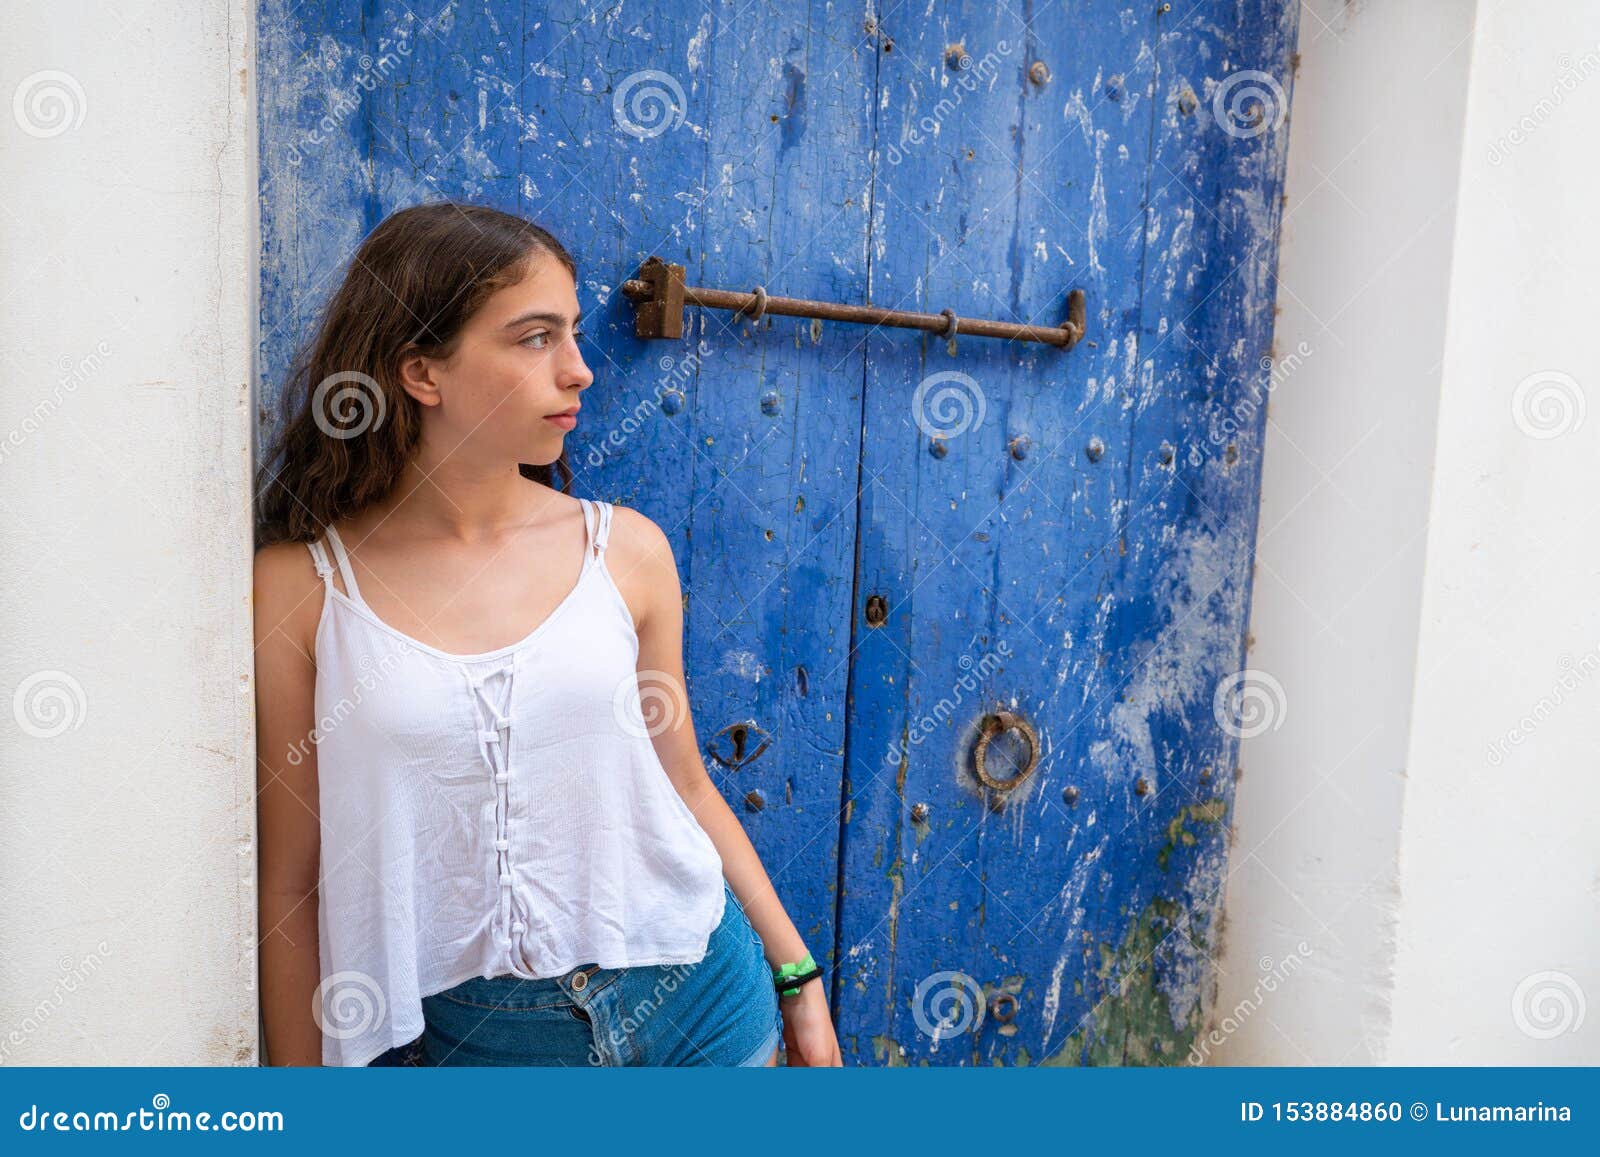 ibiza eivissa young girl on blue door